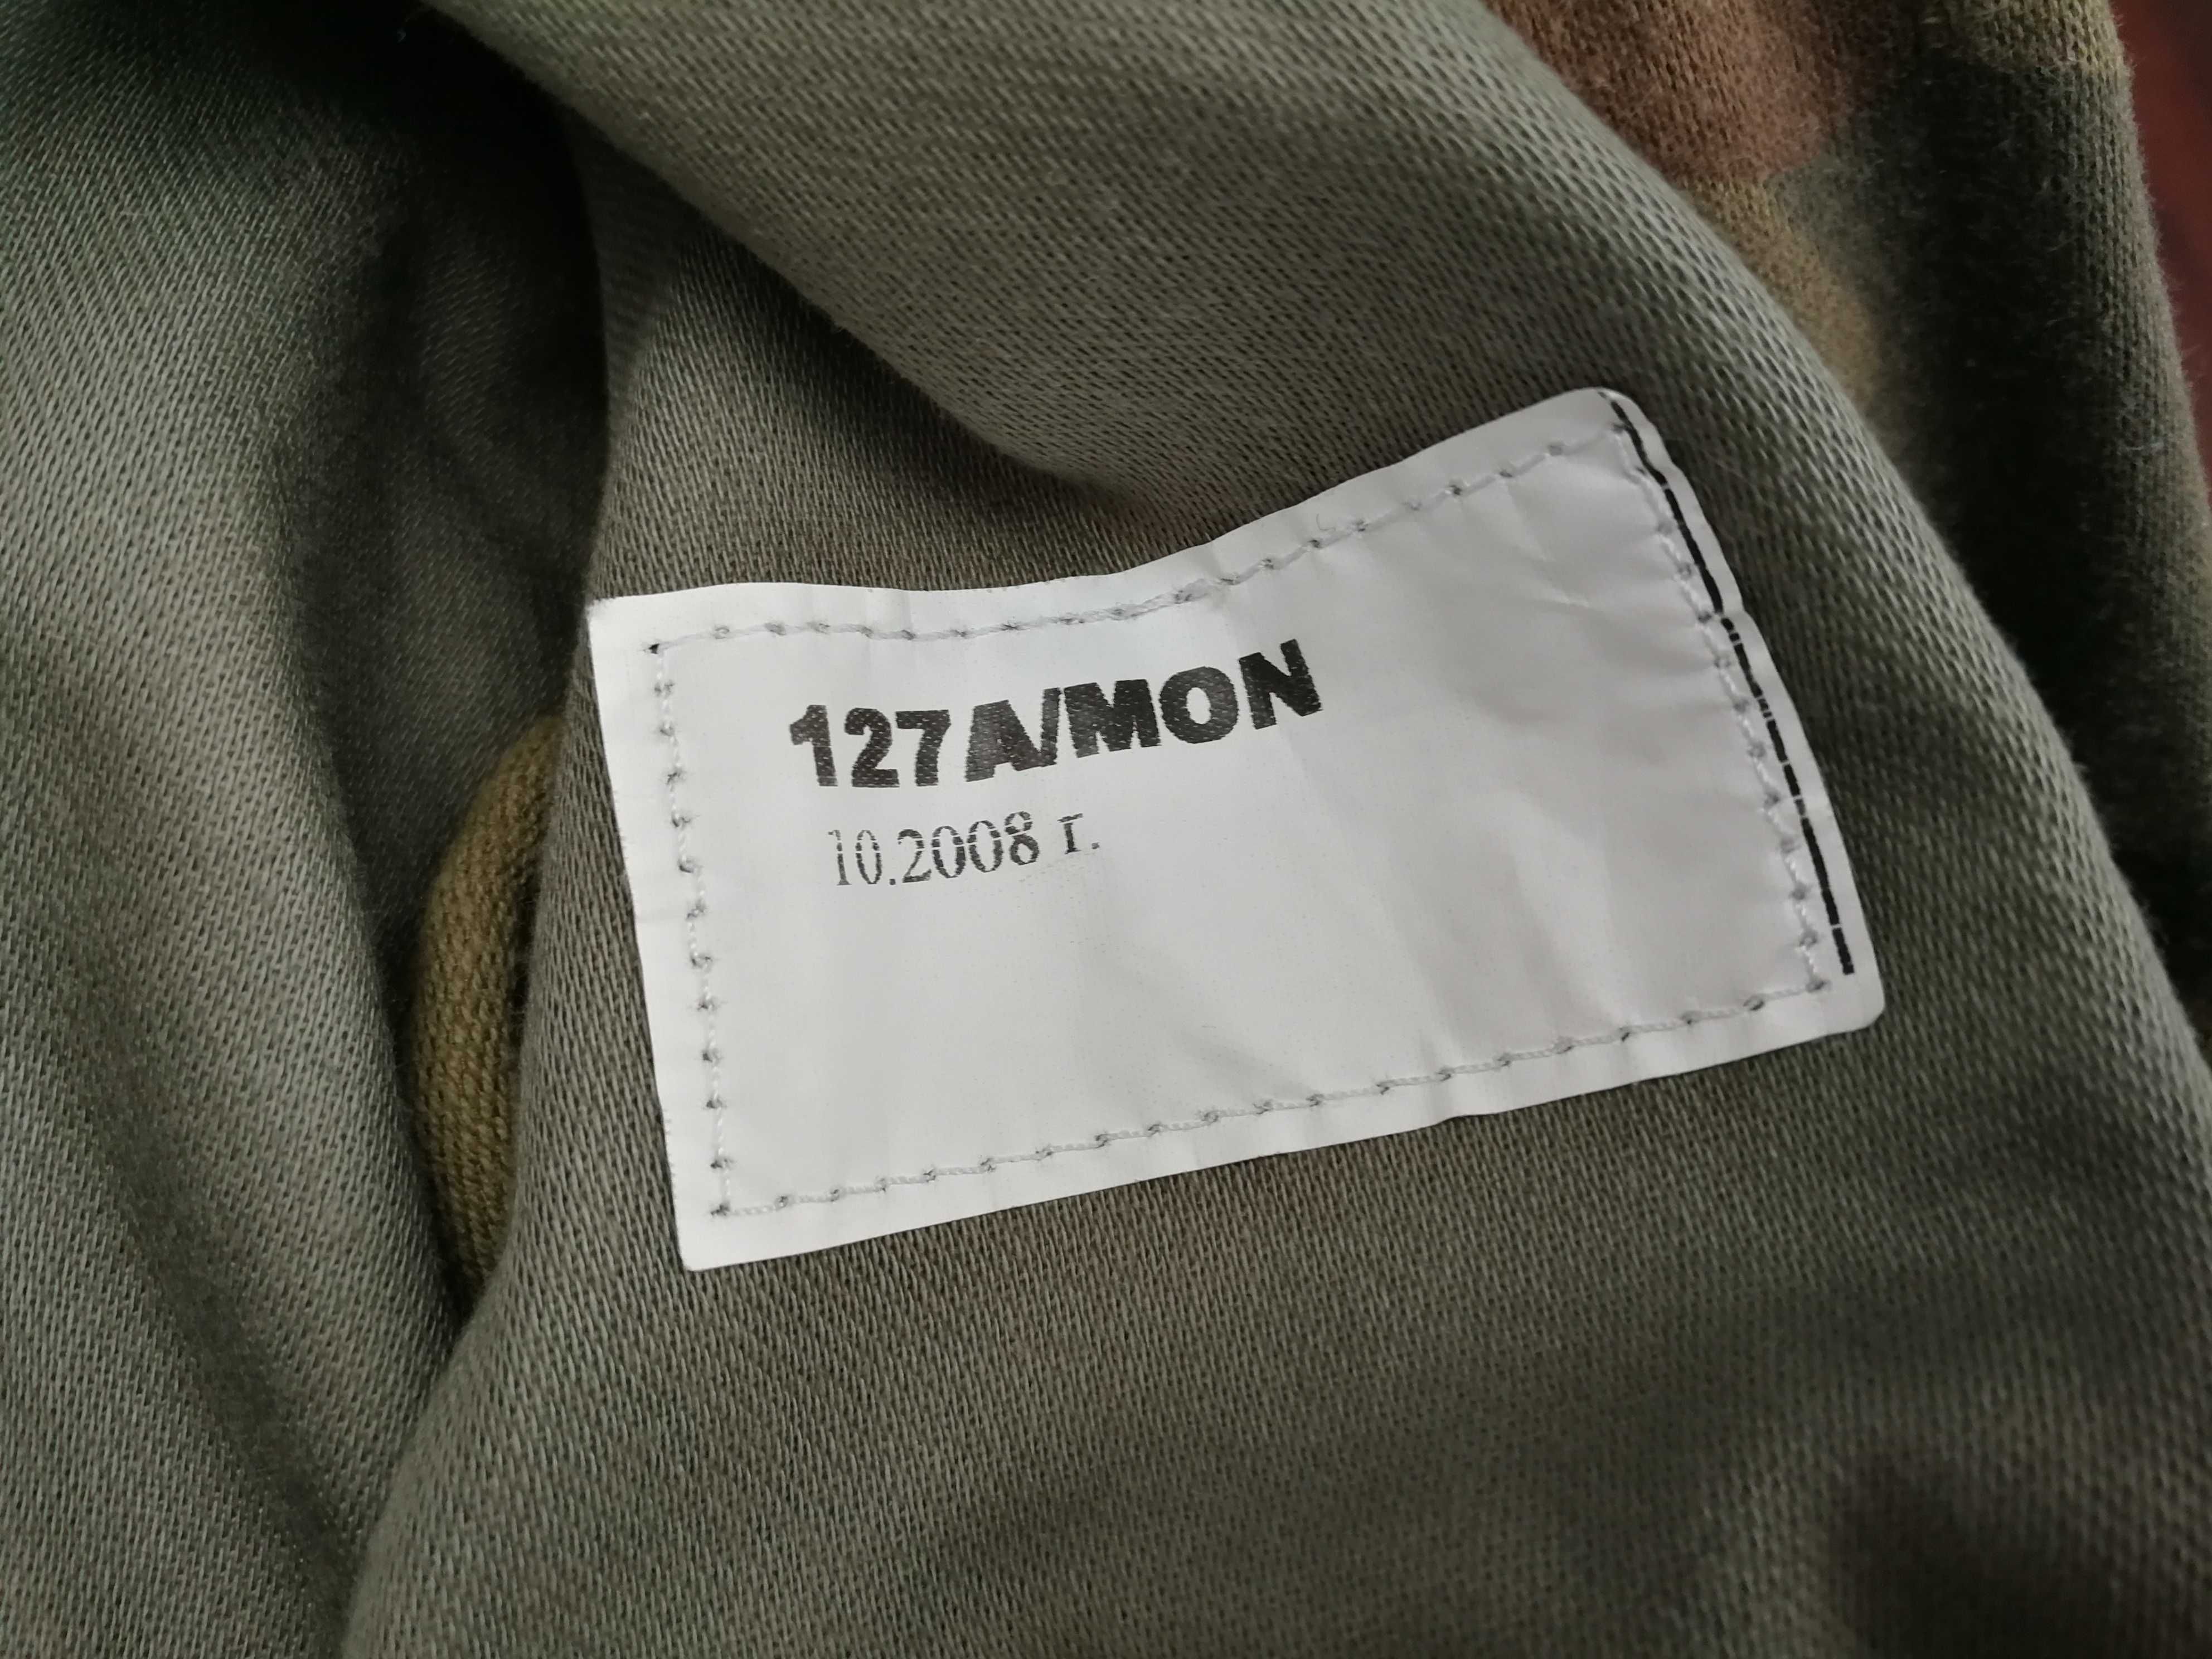 2x Bluza munduru polowego 127A/MON